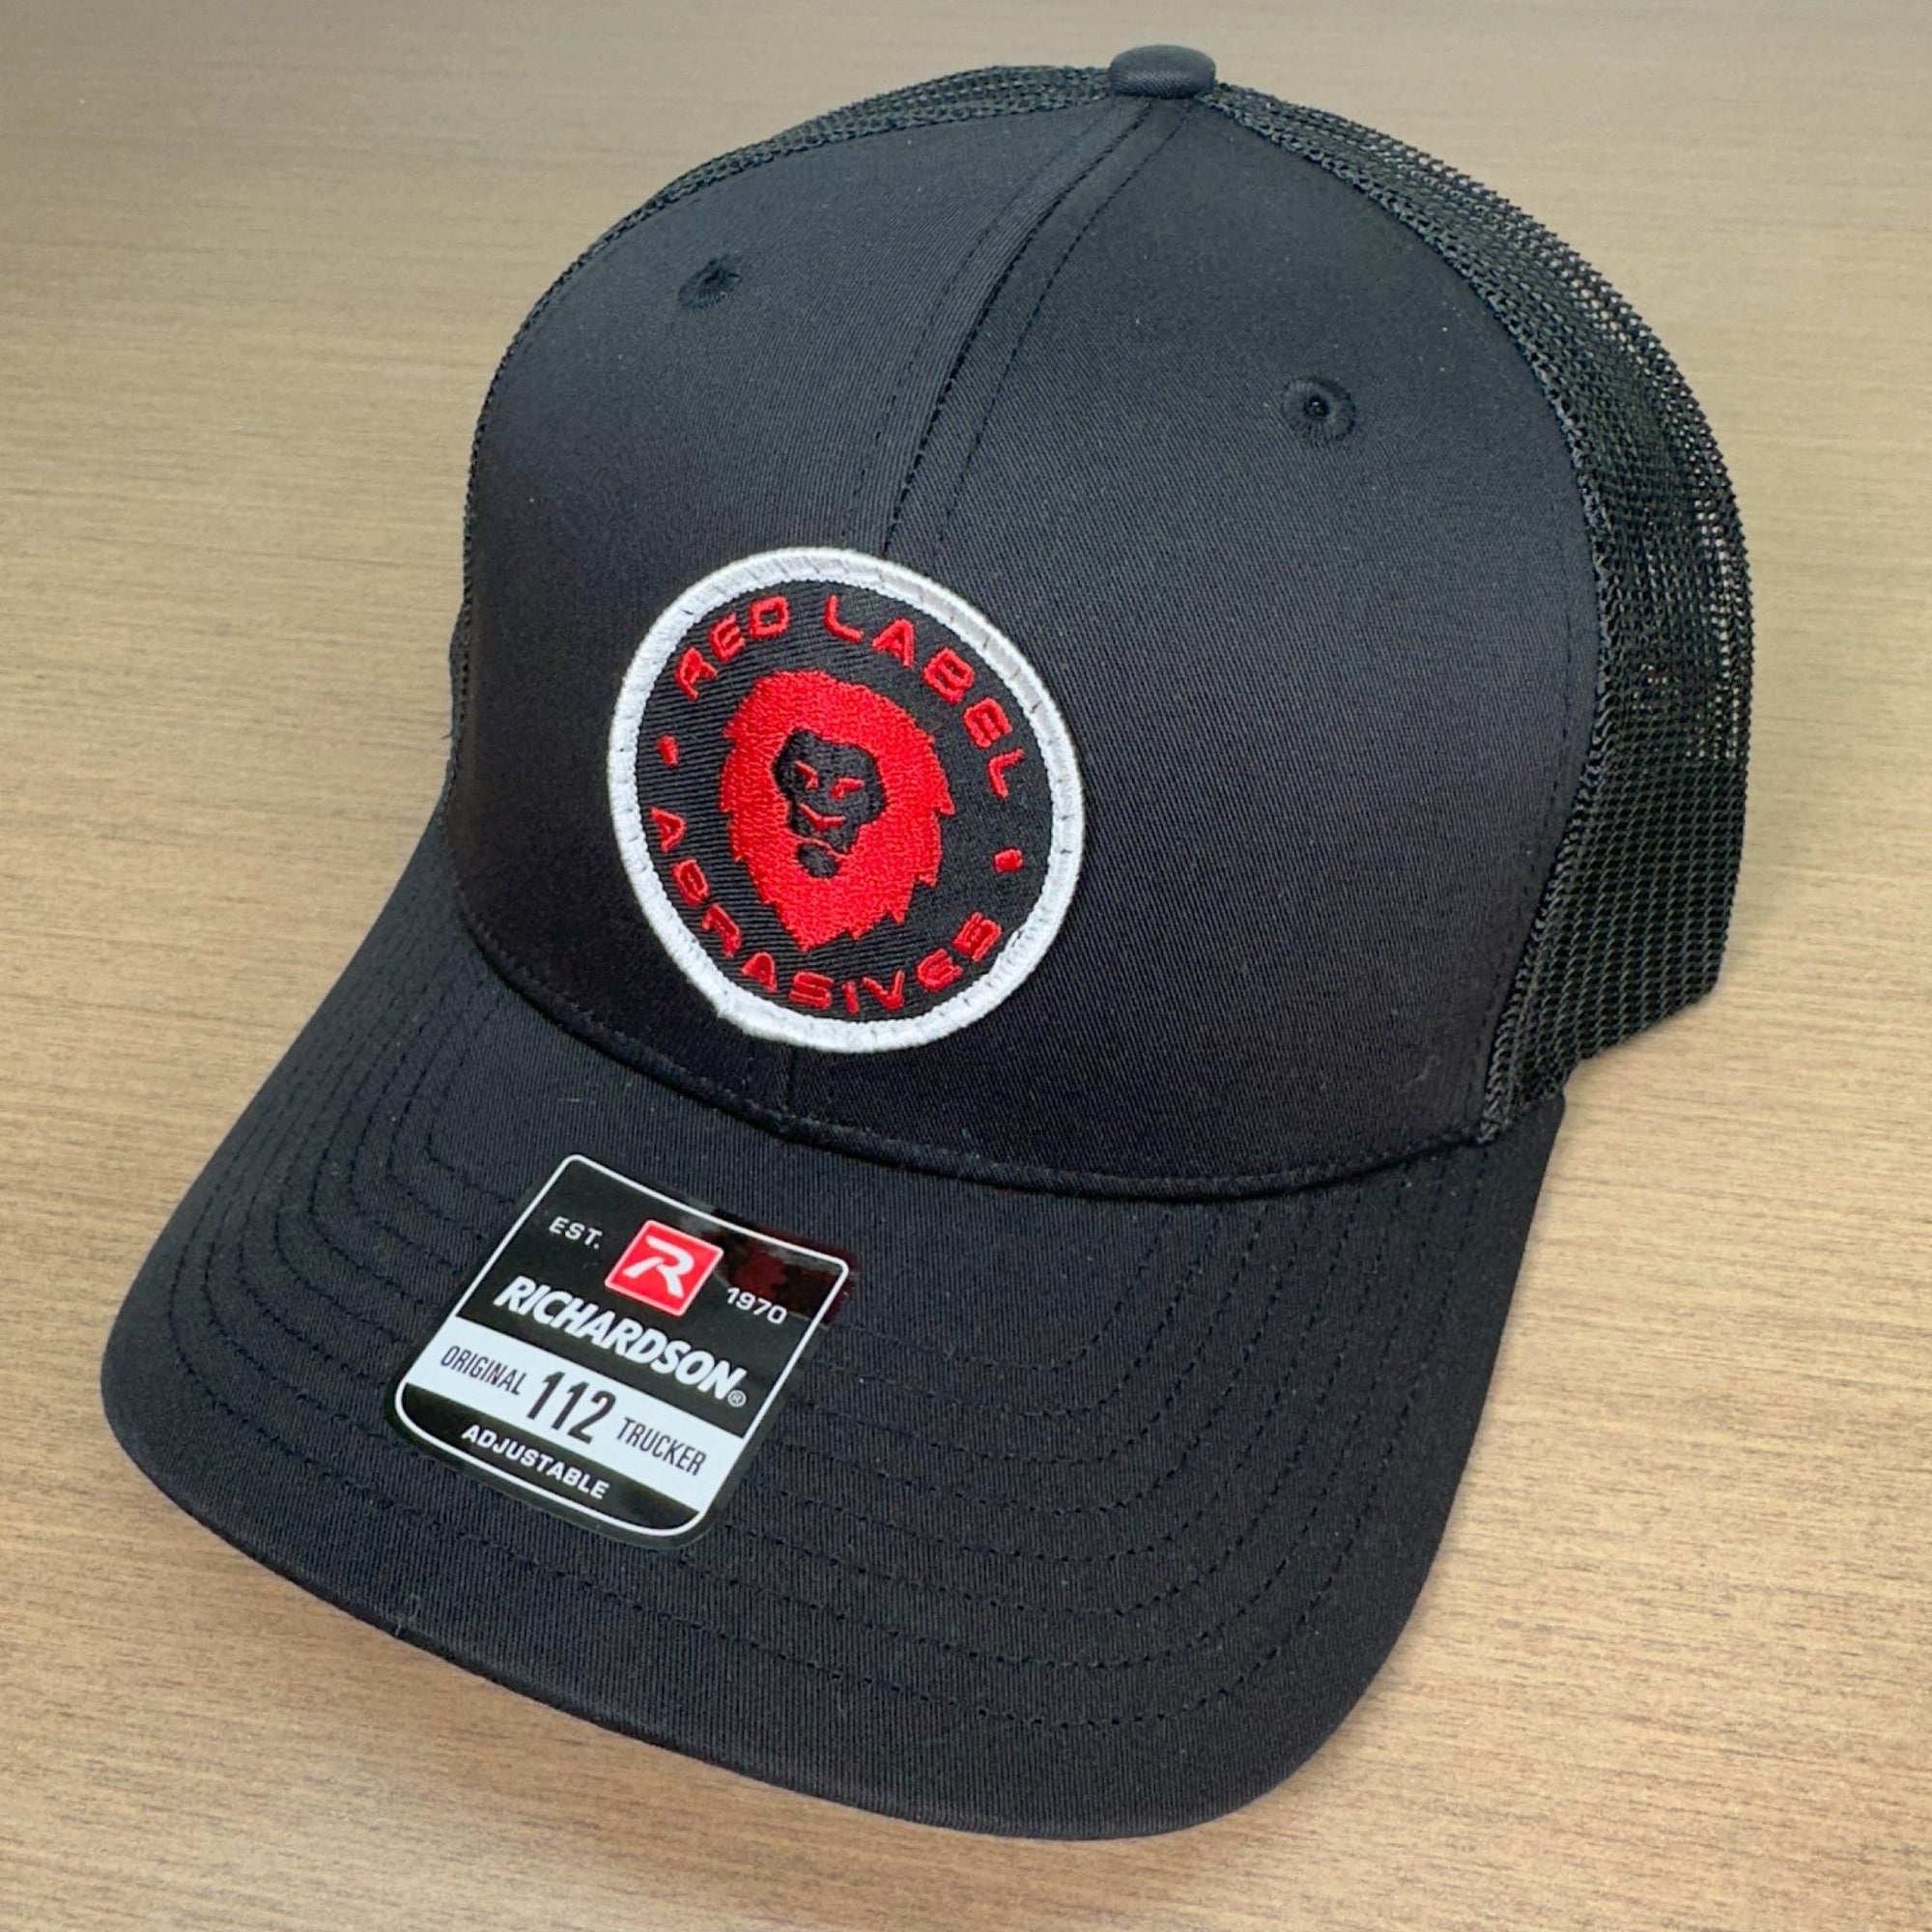 Red Label Round Patch Black Trucker Hat - Red Label Abrasives